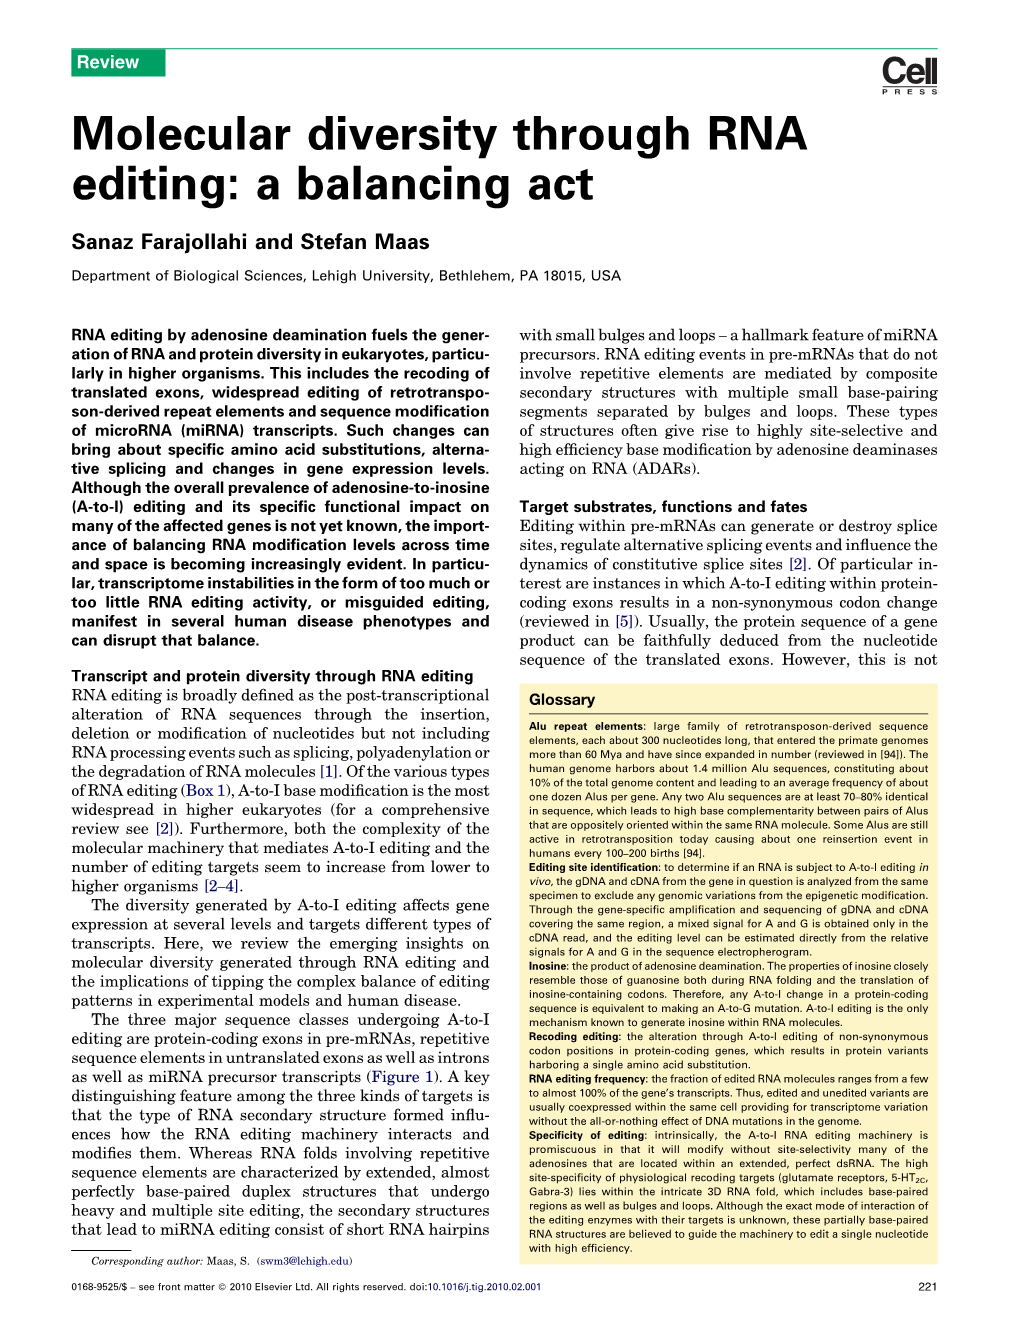 Molecular Diversity Through RNA Editing: a Balancing Act